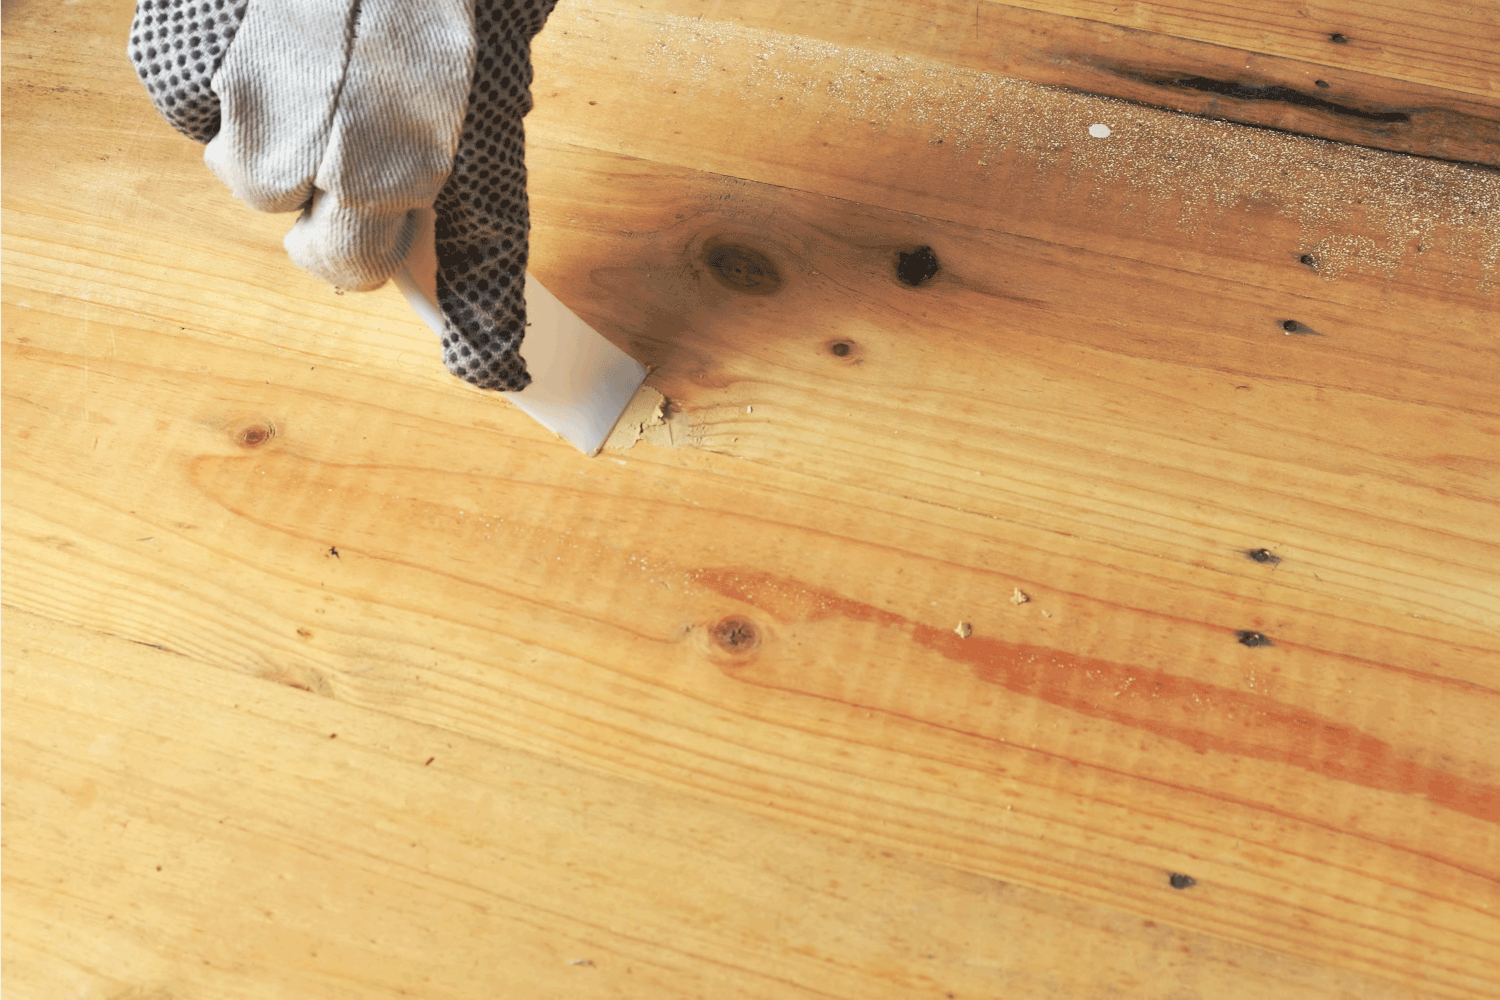 Hand in glove with trowel applying wood filler before sanding